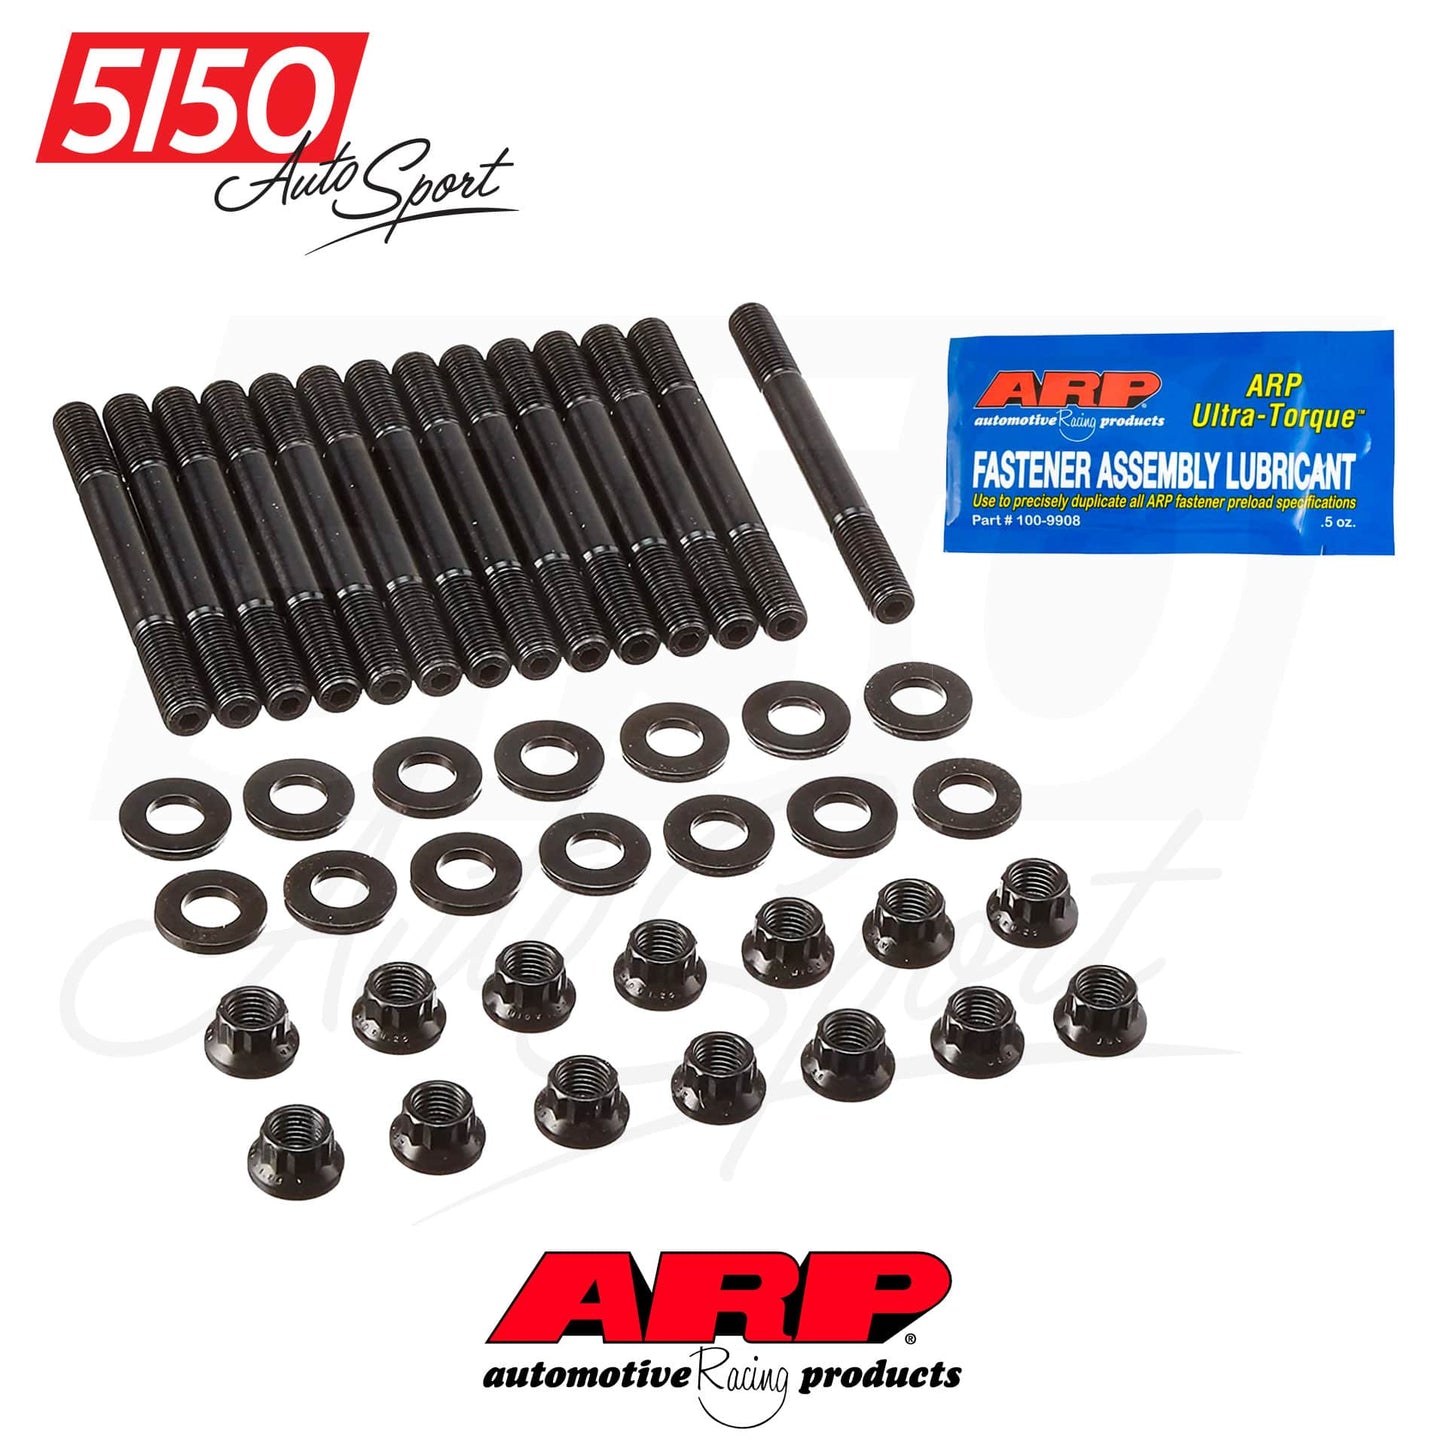 ARP Main Stud Kits, BMW Engines